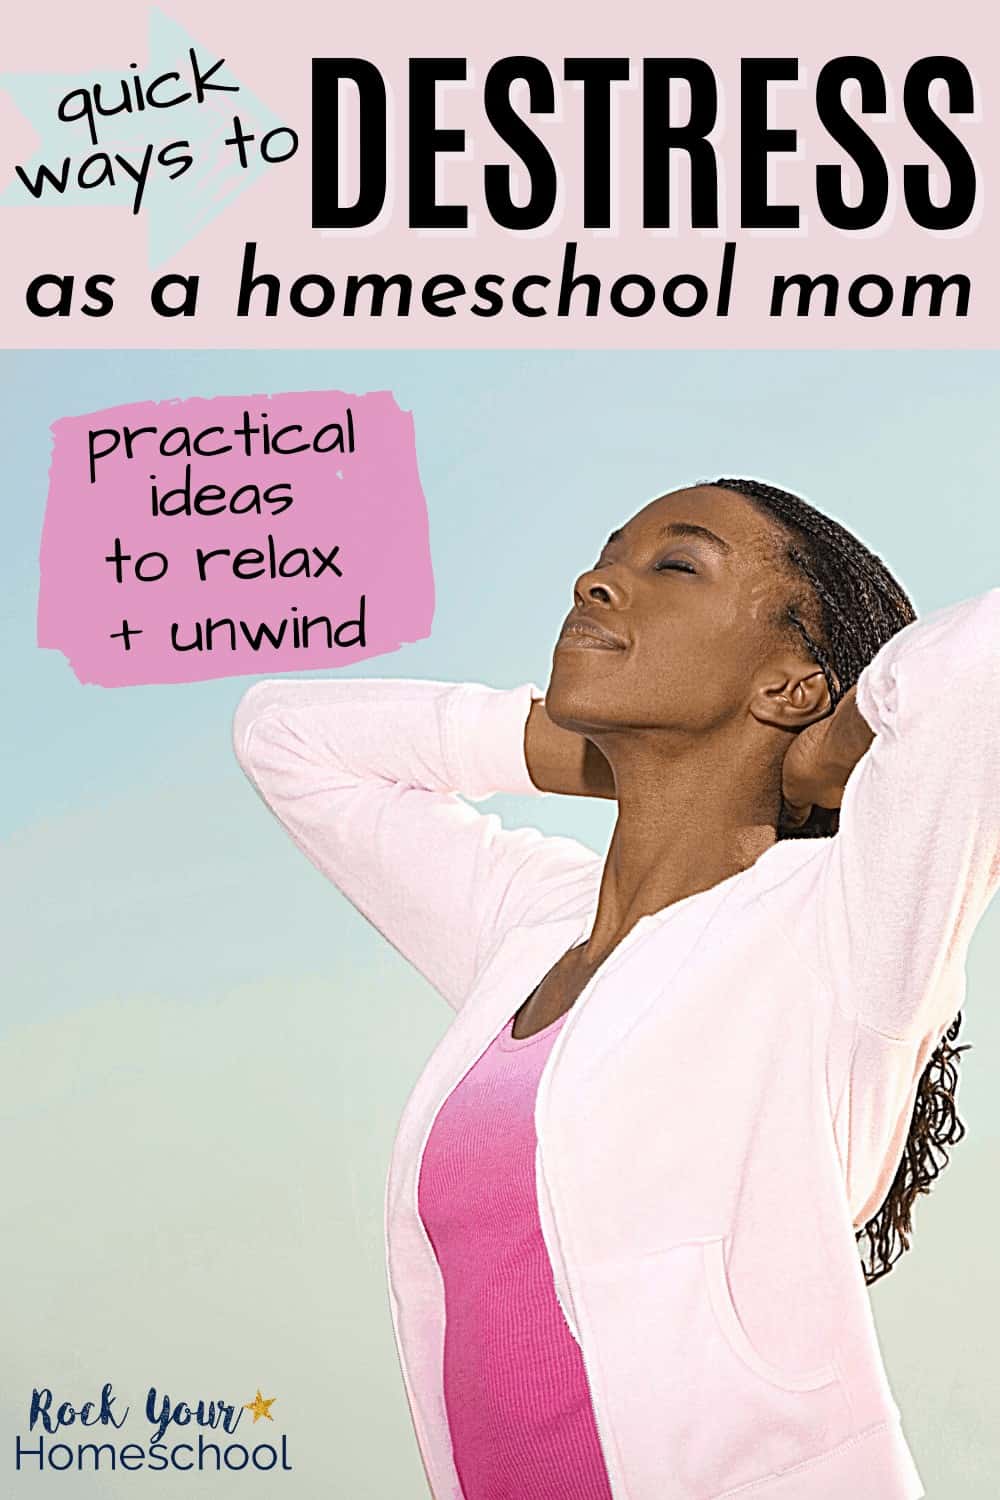 10 Quick & Practical Ways to Destress as a Homeschool Mom